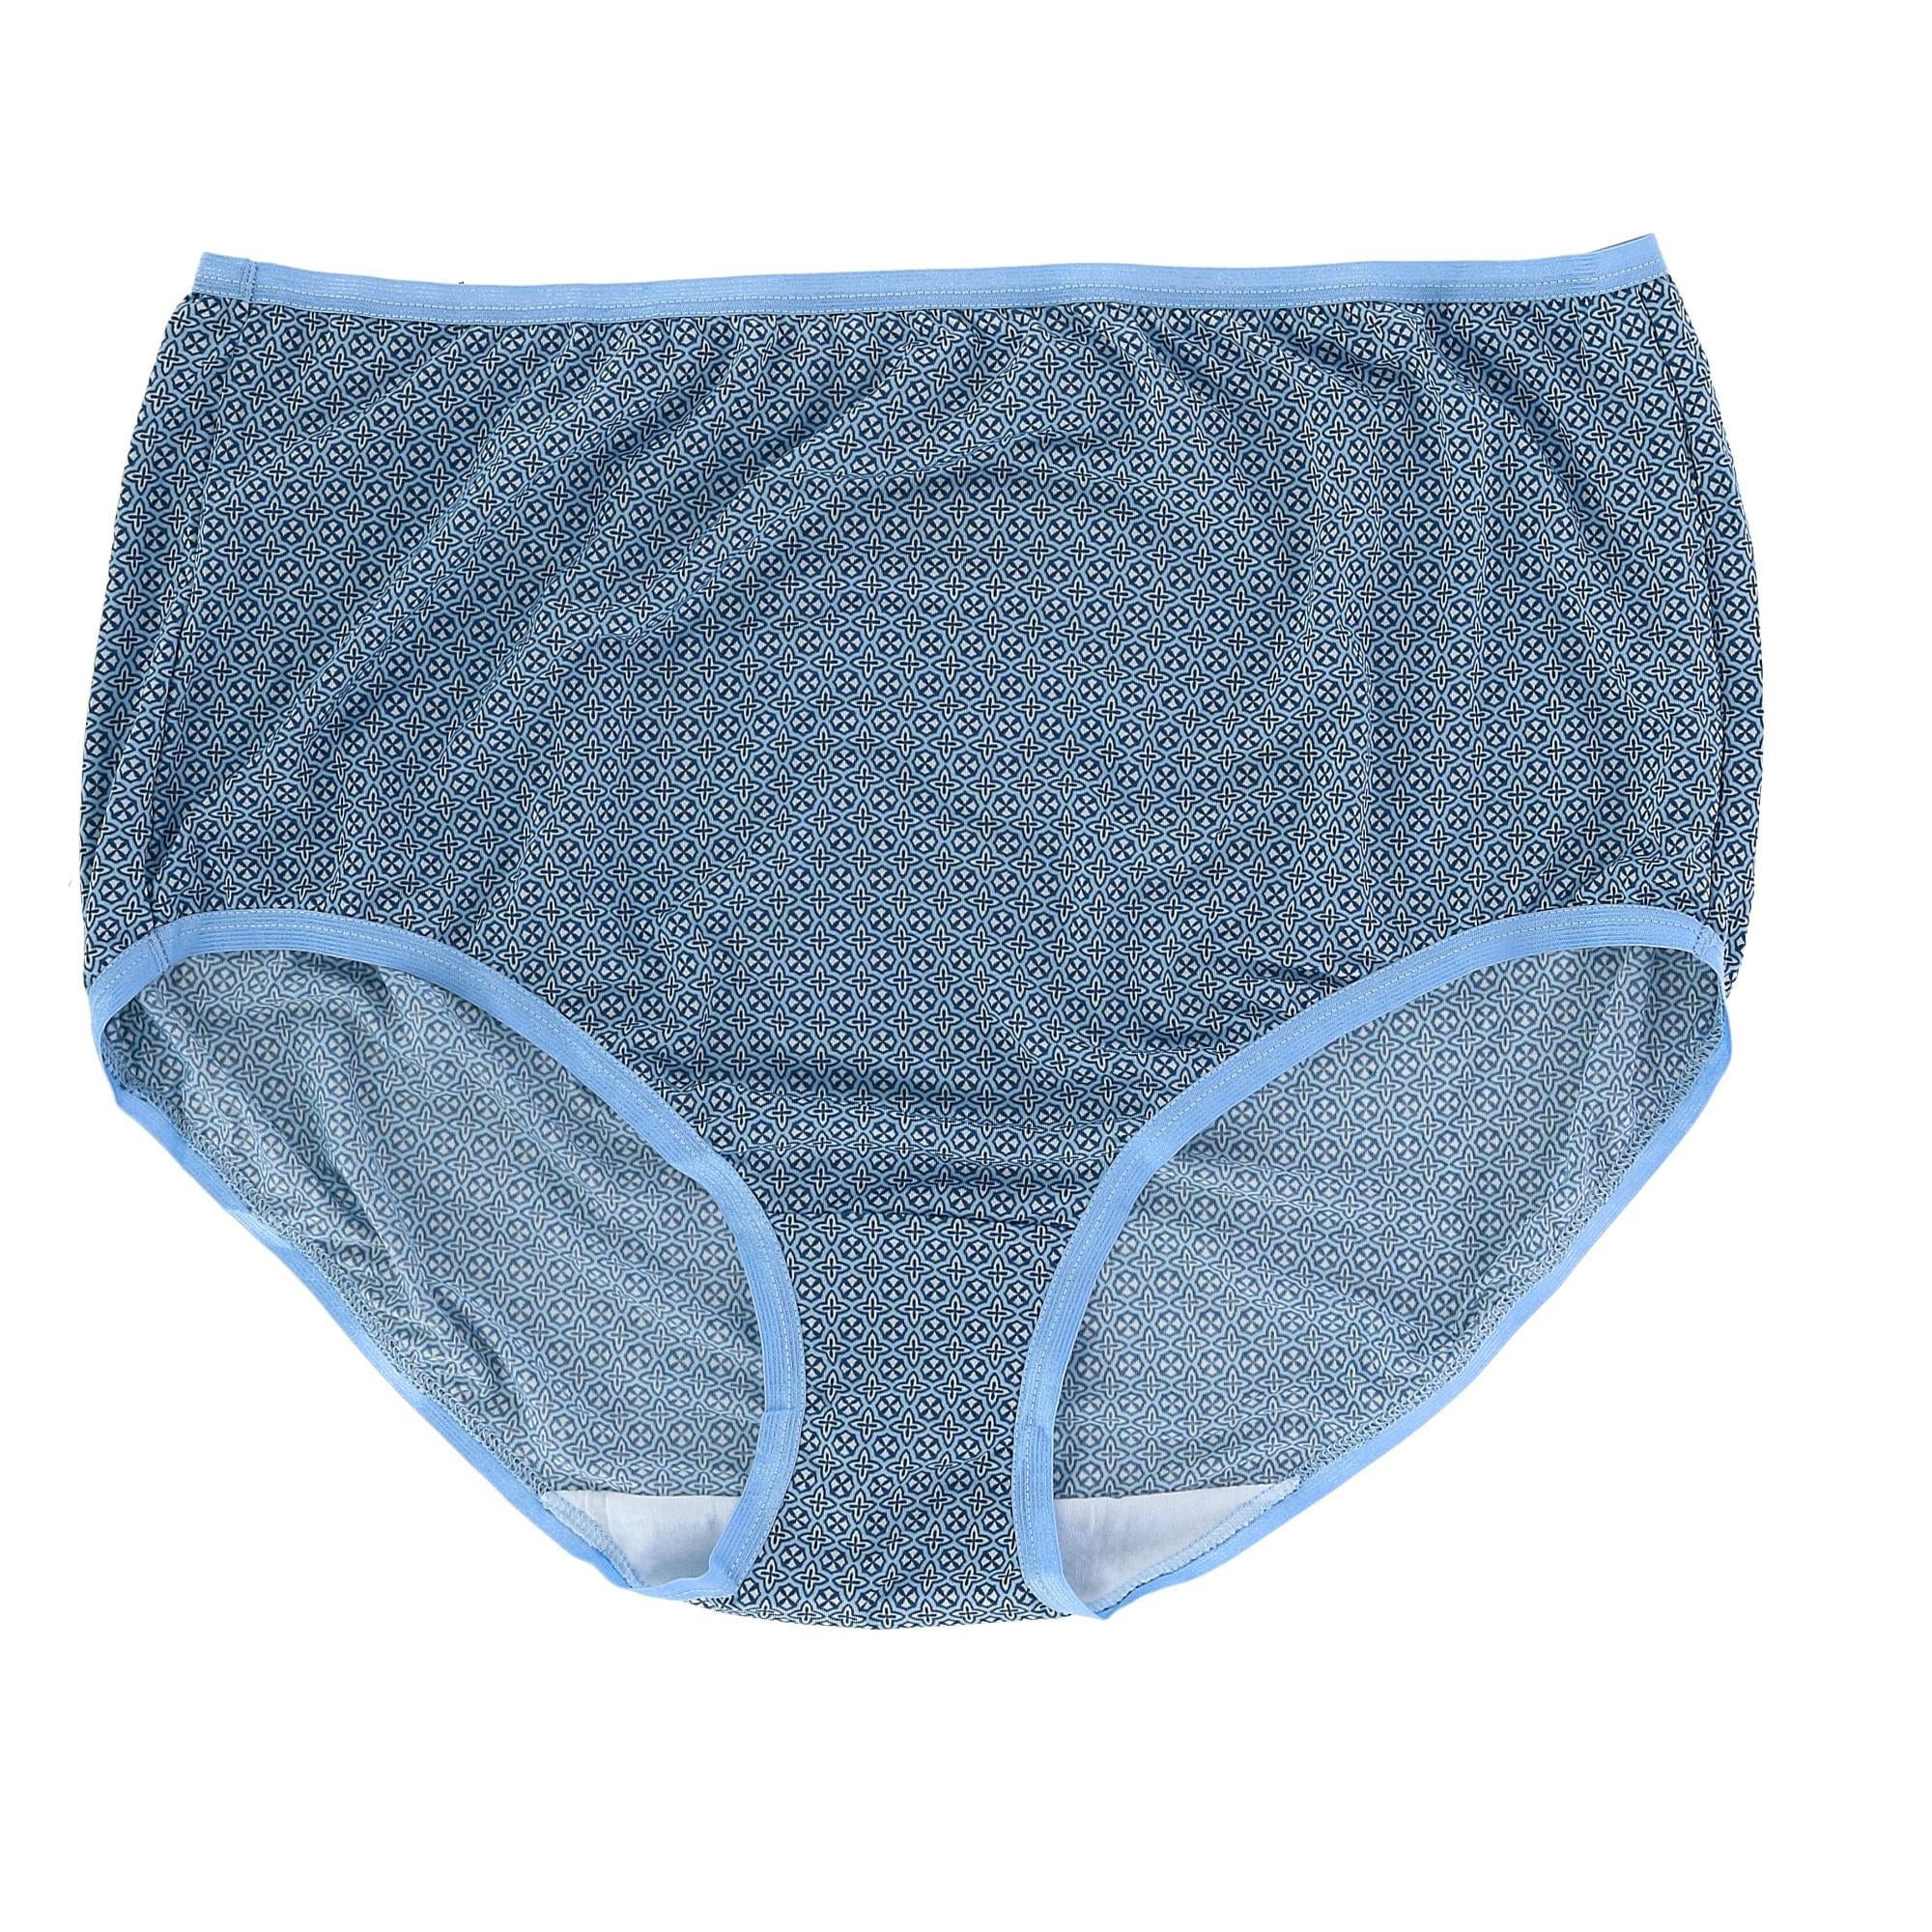 Fruit of the Loom Women's Assorted Heather Brief Underwear, 6-Pack 